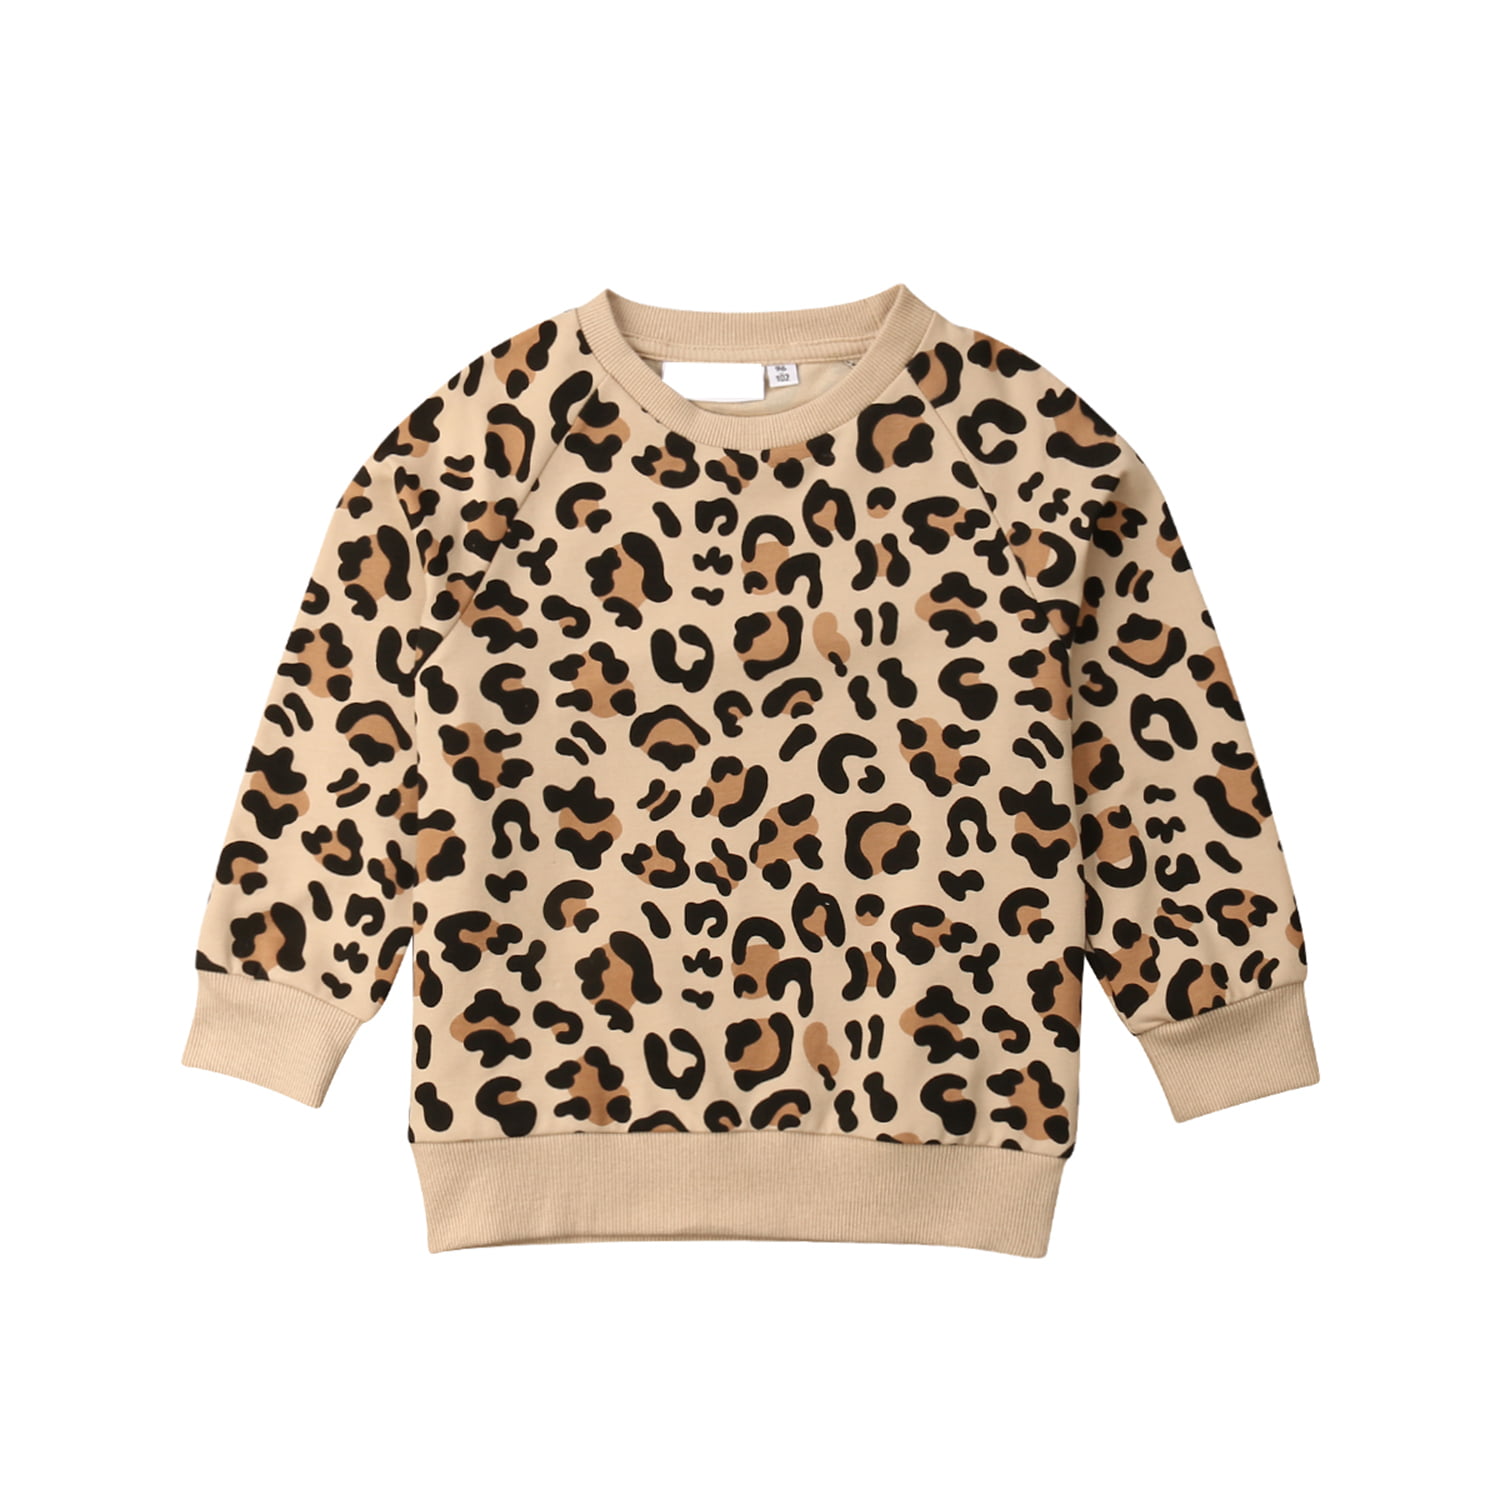 Shawnlen Infant Little Girl Winter Spring O Neck Long Sleeve Leopard Print Cotton Pullover Sweatshirt Tops